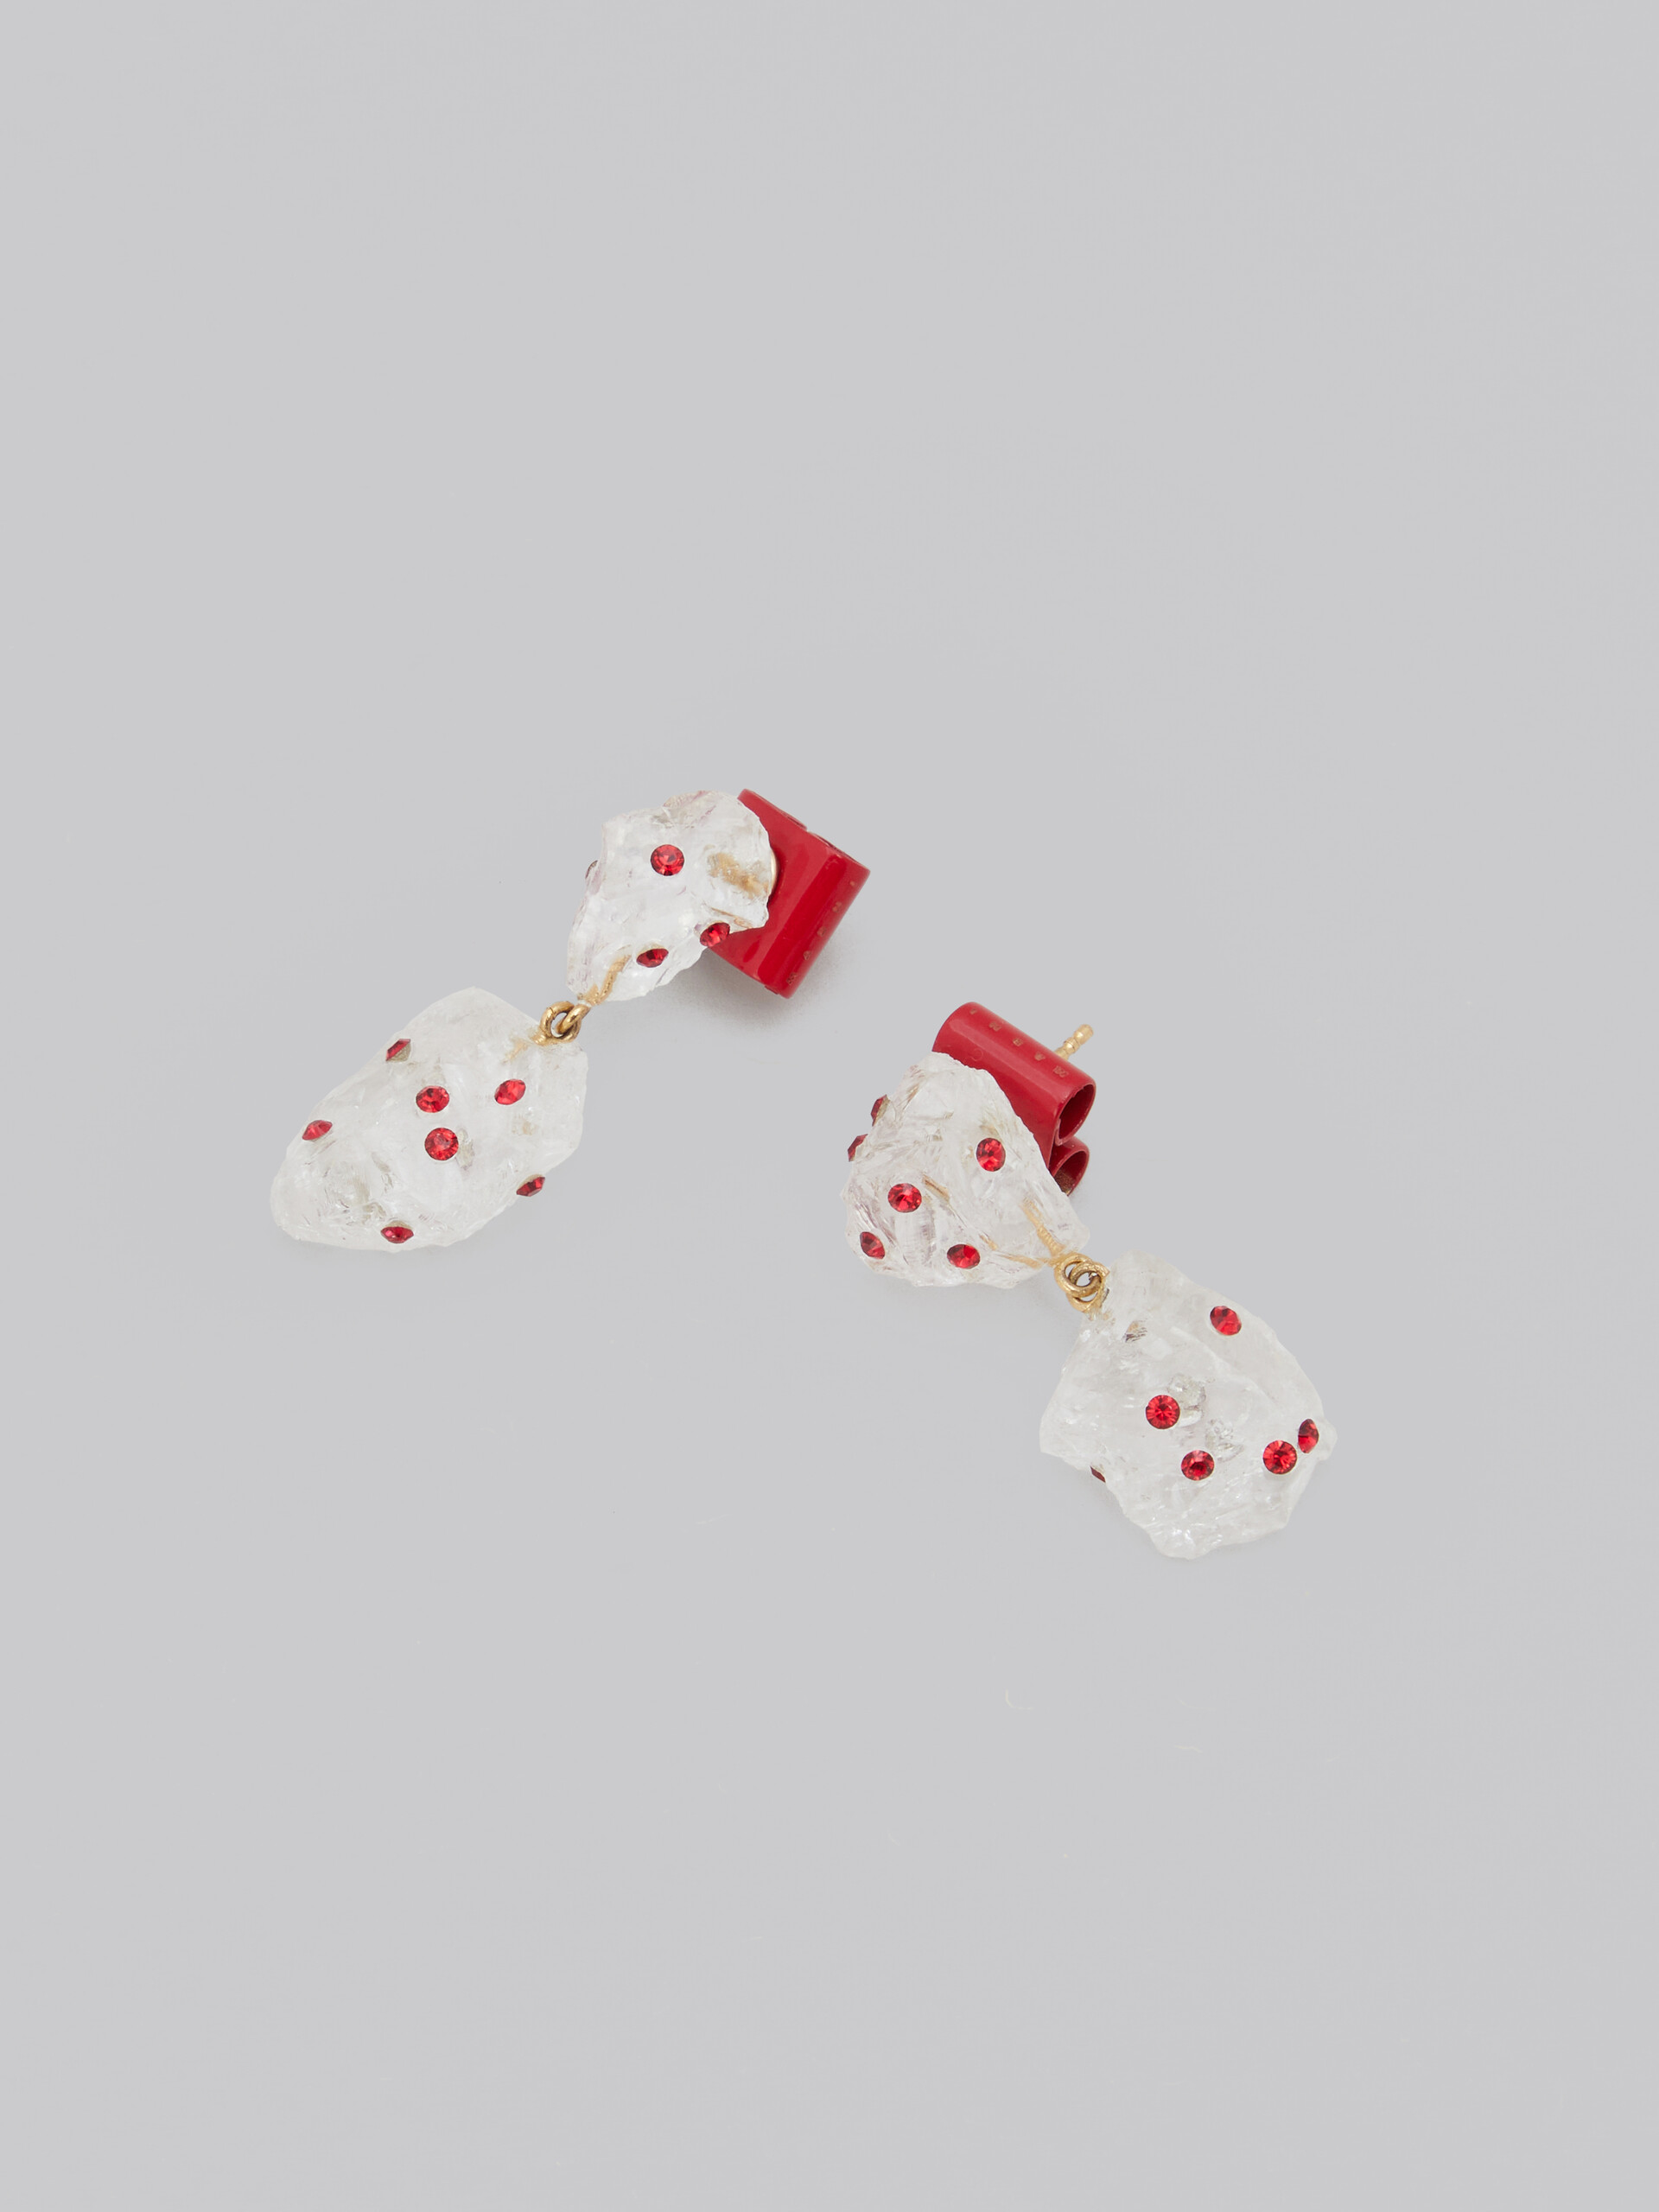 White quartz drop earrings with rhinestone polka dots - Earrings - Image 4